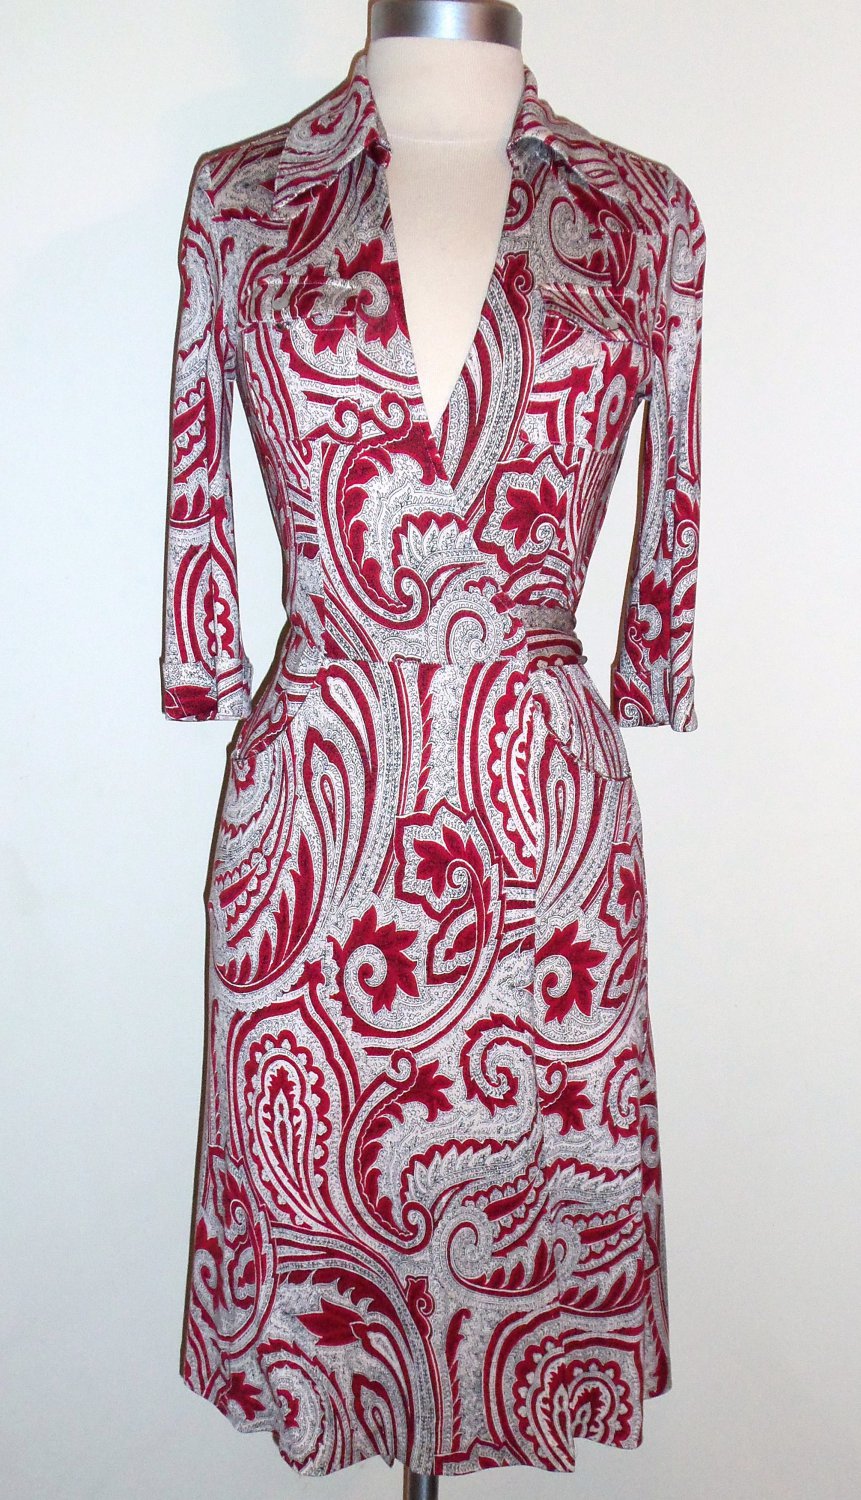 Vintage Floral Print Wrap Dress by Diane von Furstenberg Size 2 - SOLD